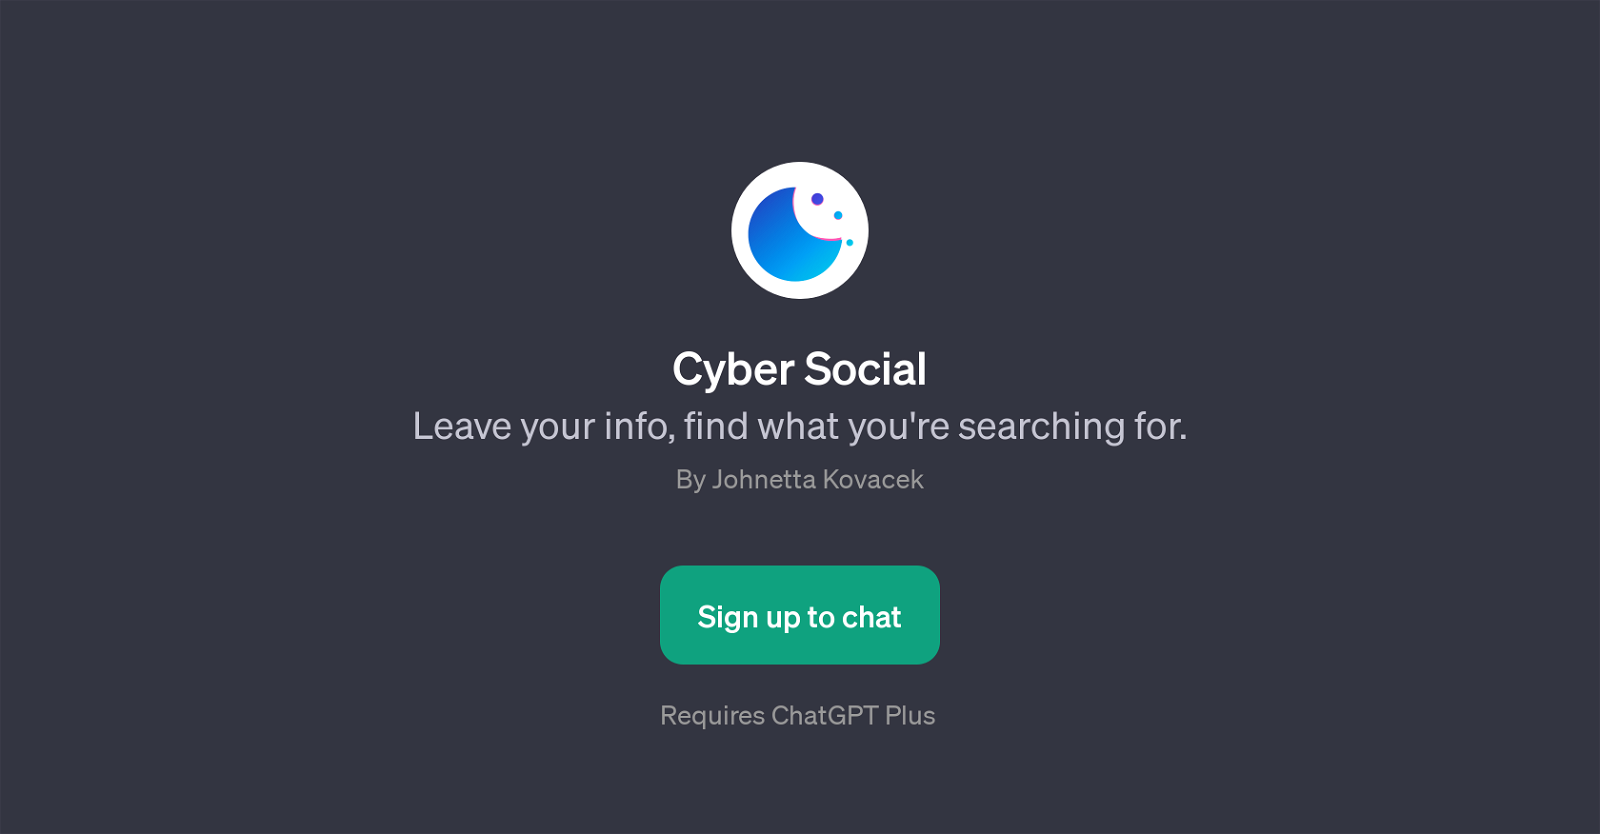 Cyber Social website